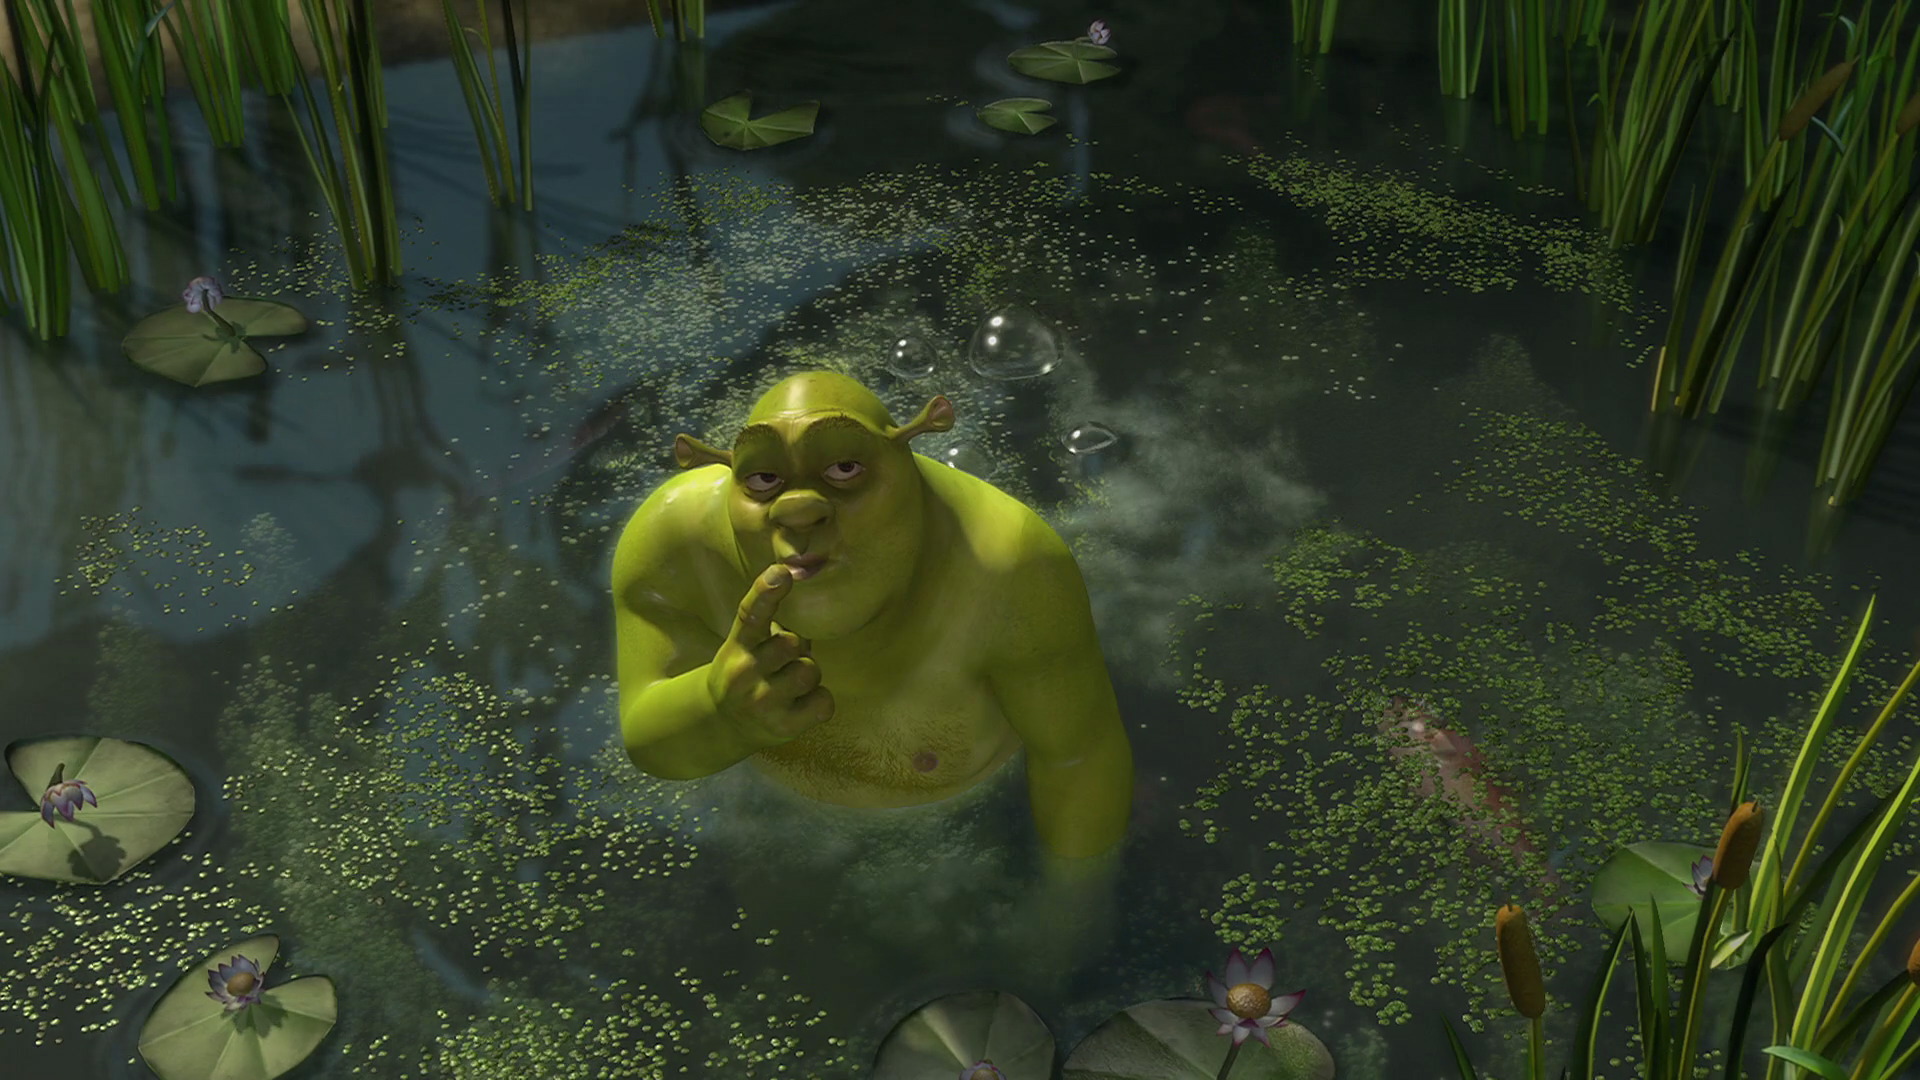 shrek looking cheeky after farting in his swamp